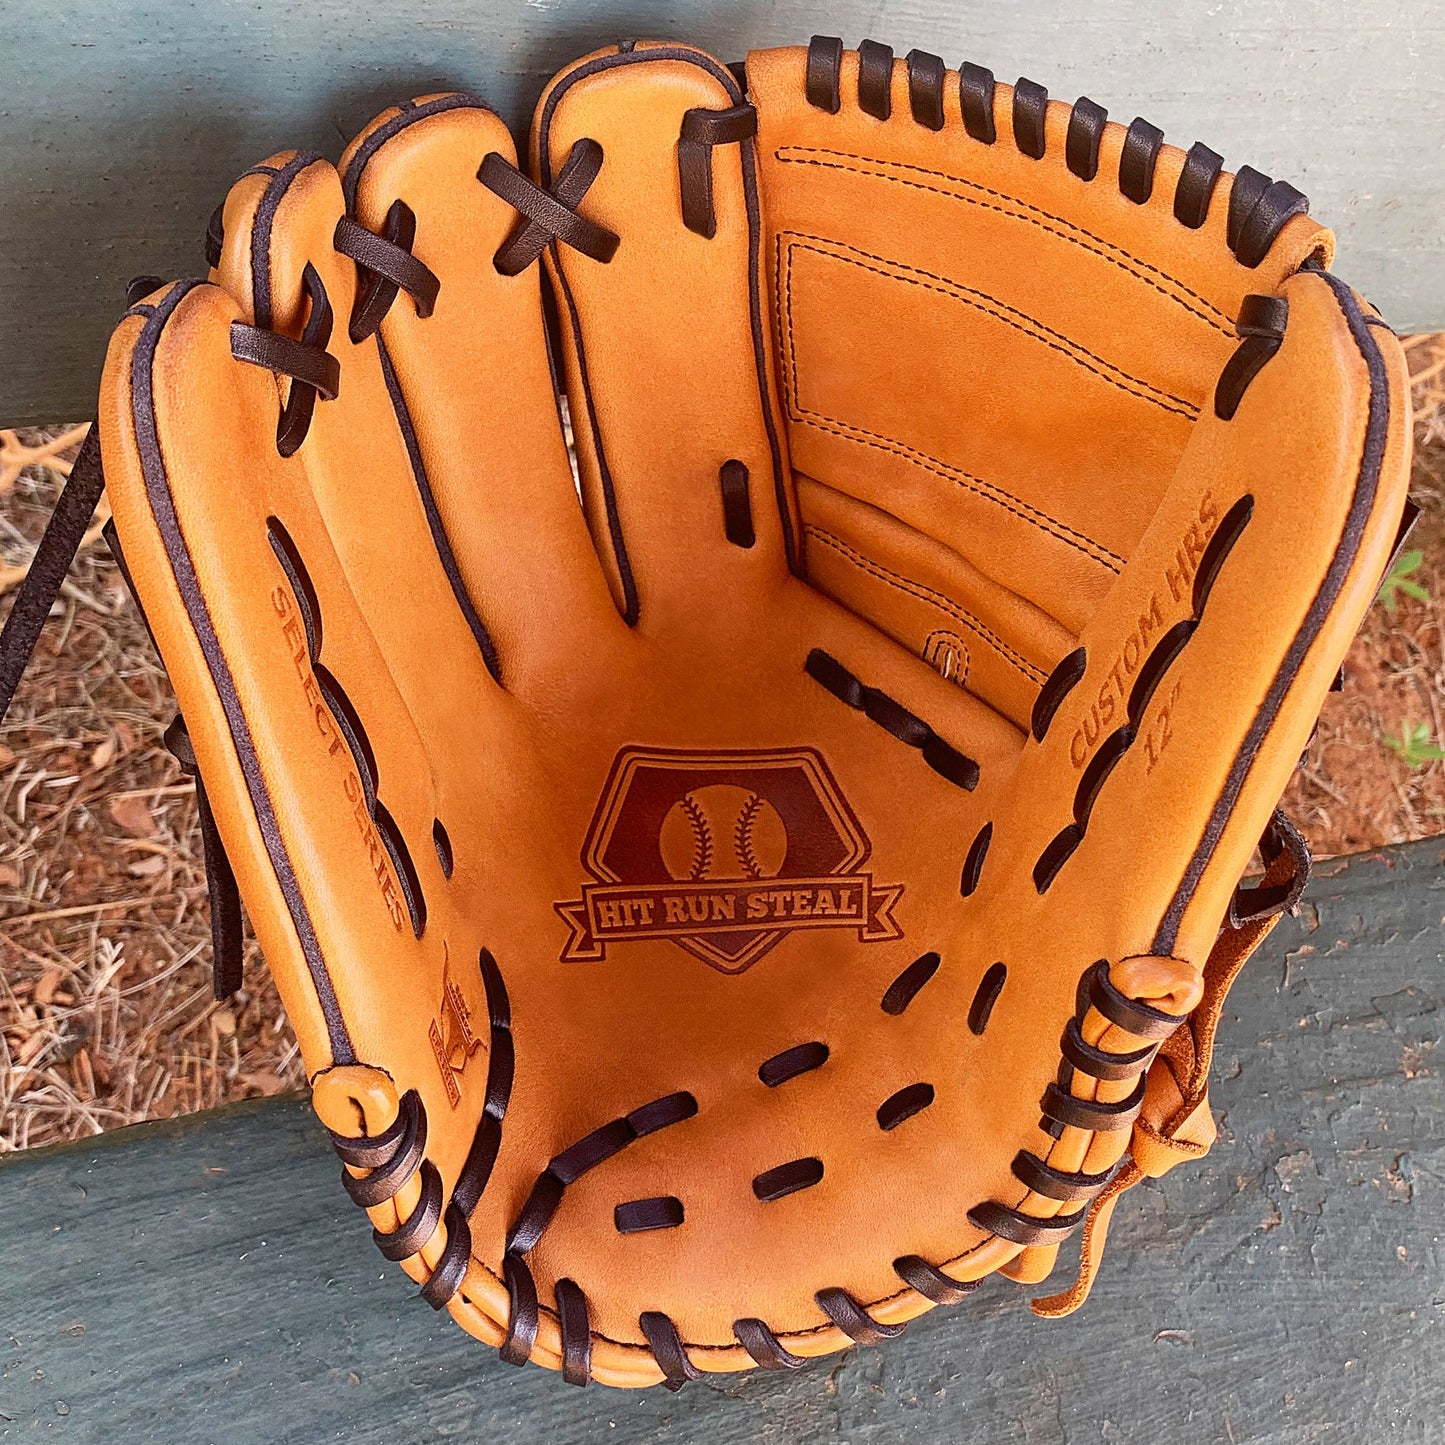 All leather baseball pitchers glove